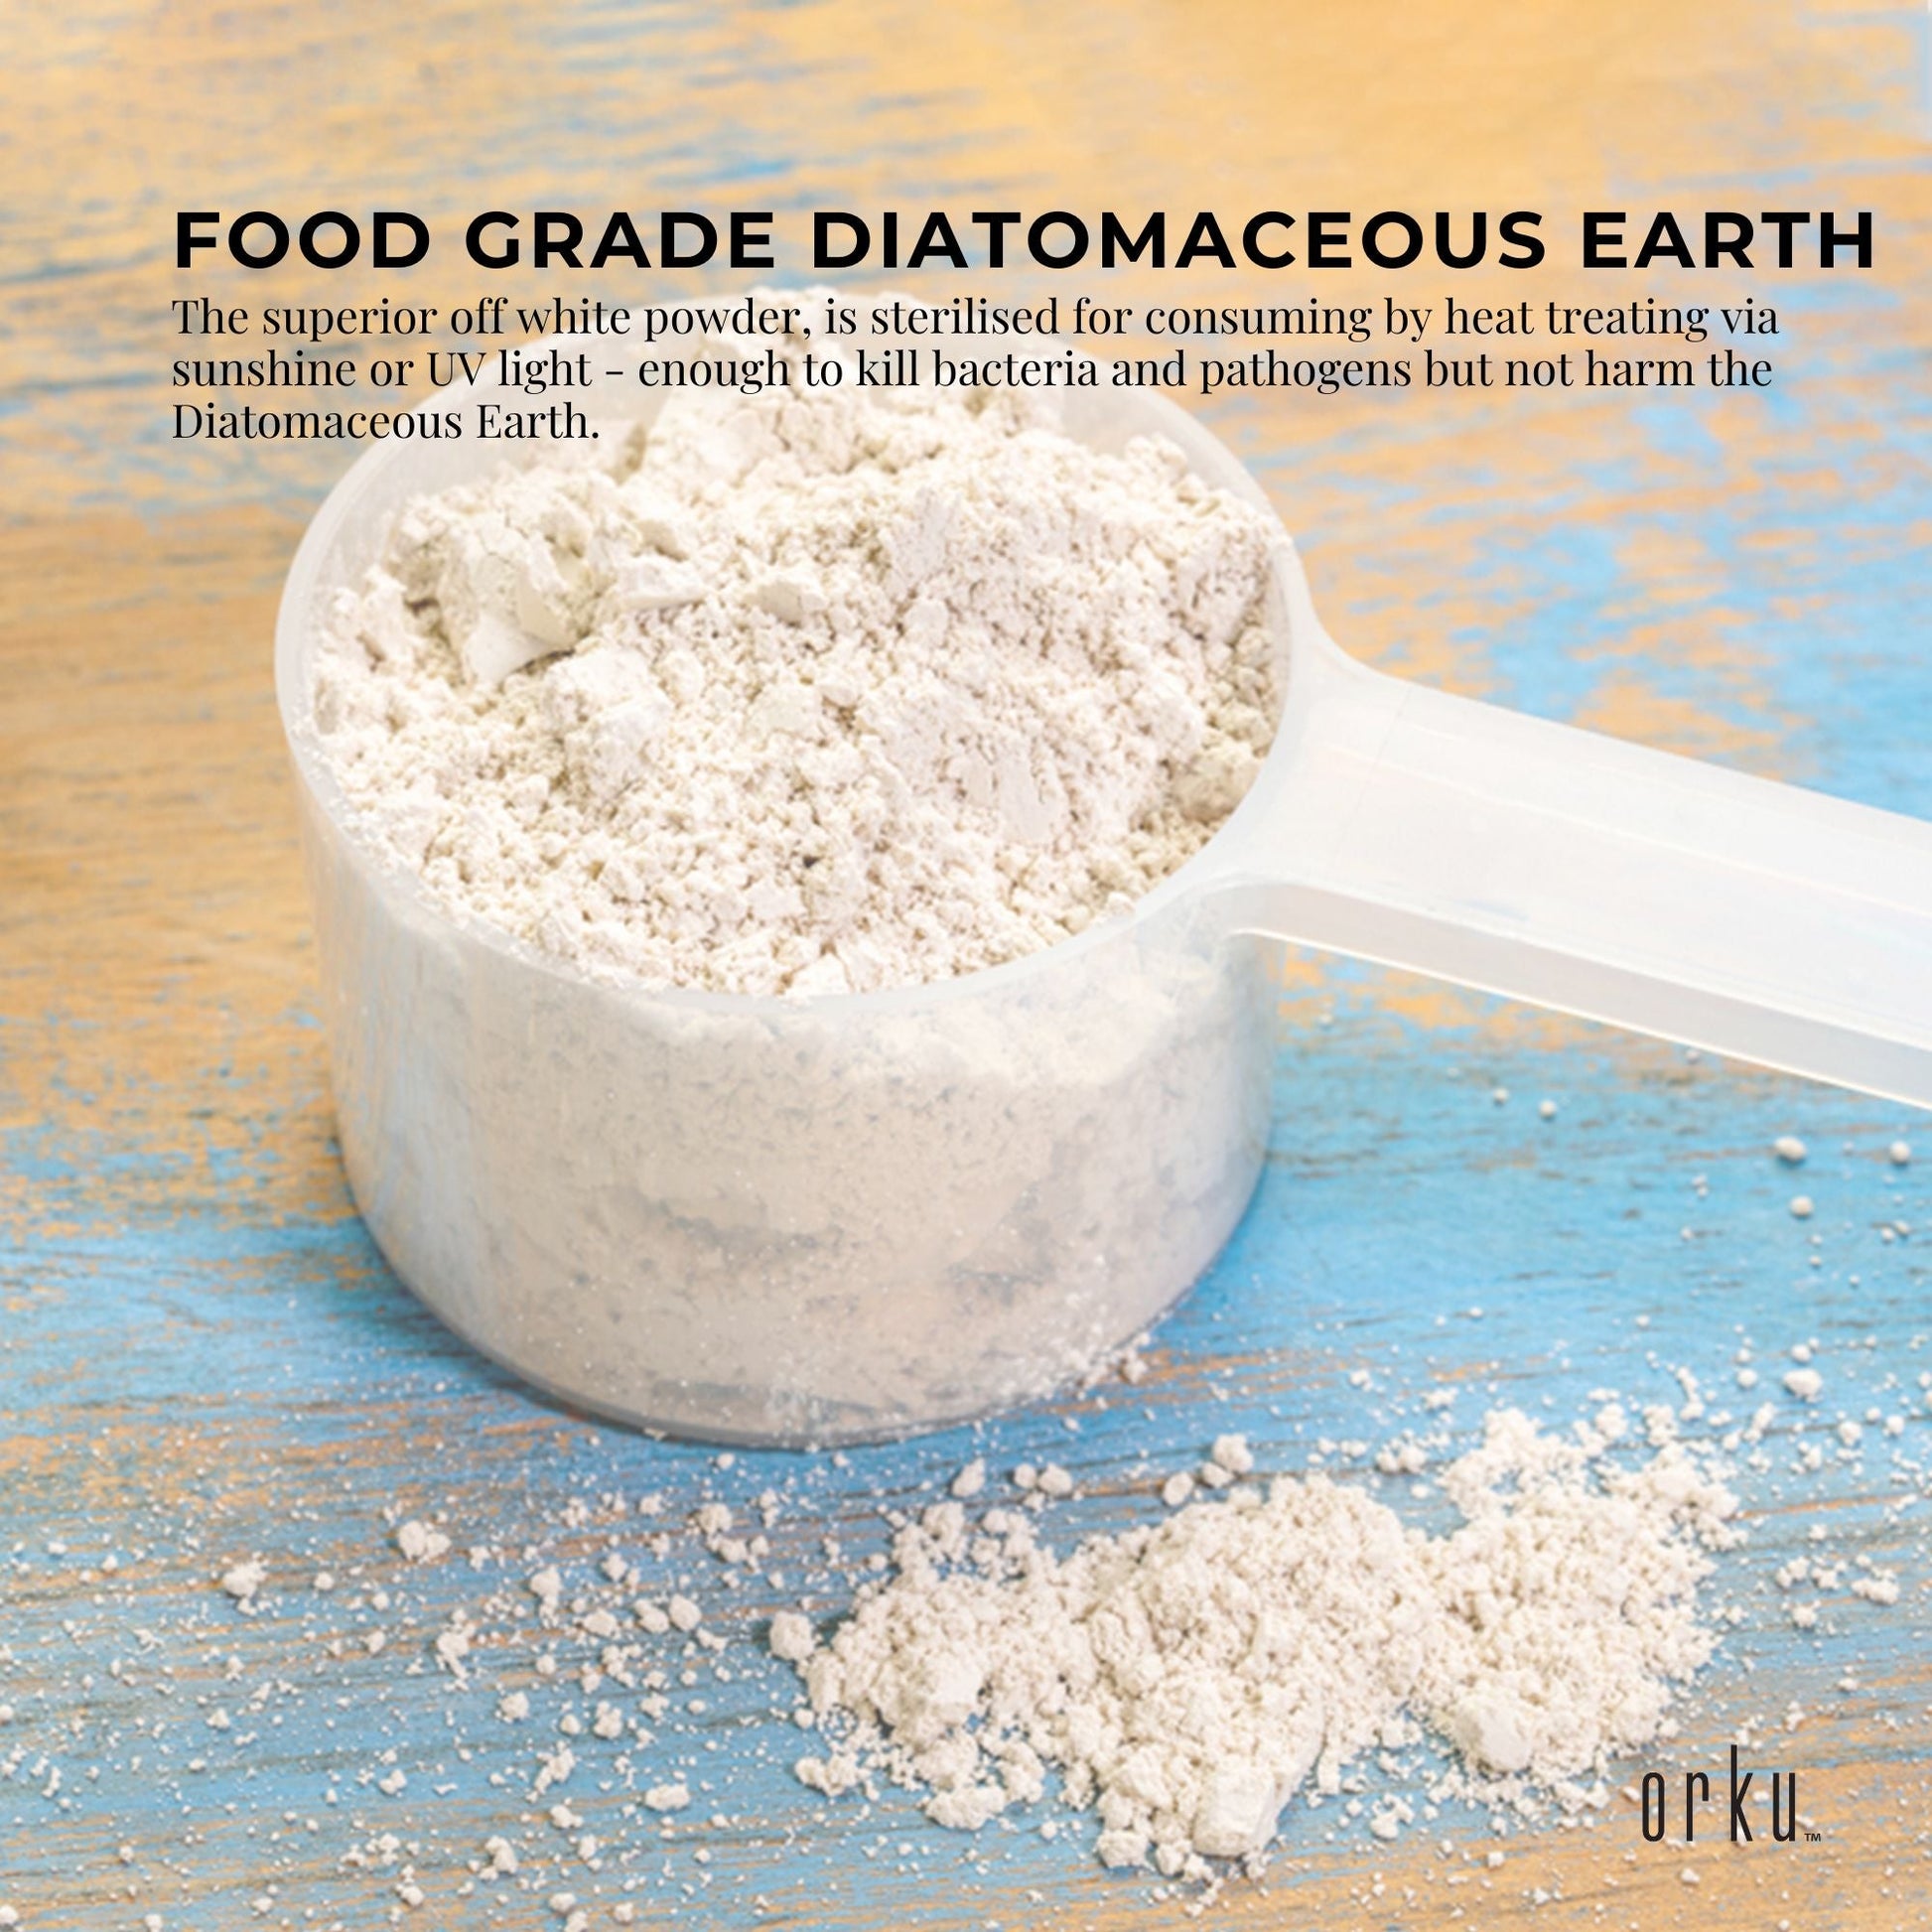 2Kg Organic Fine Diatomaceous Earth - Food Grade Fossil Shell Flour Powder